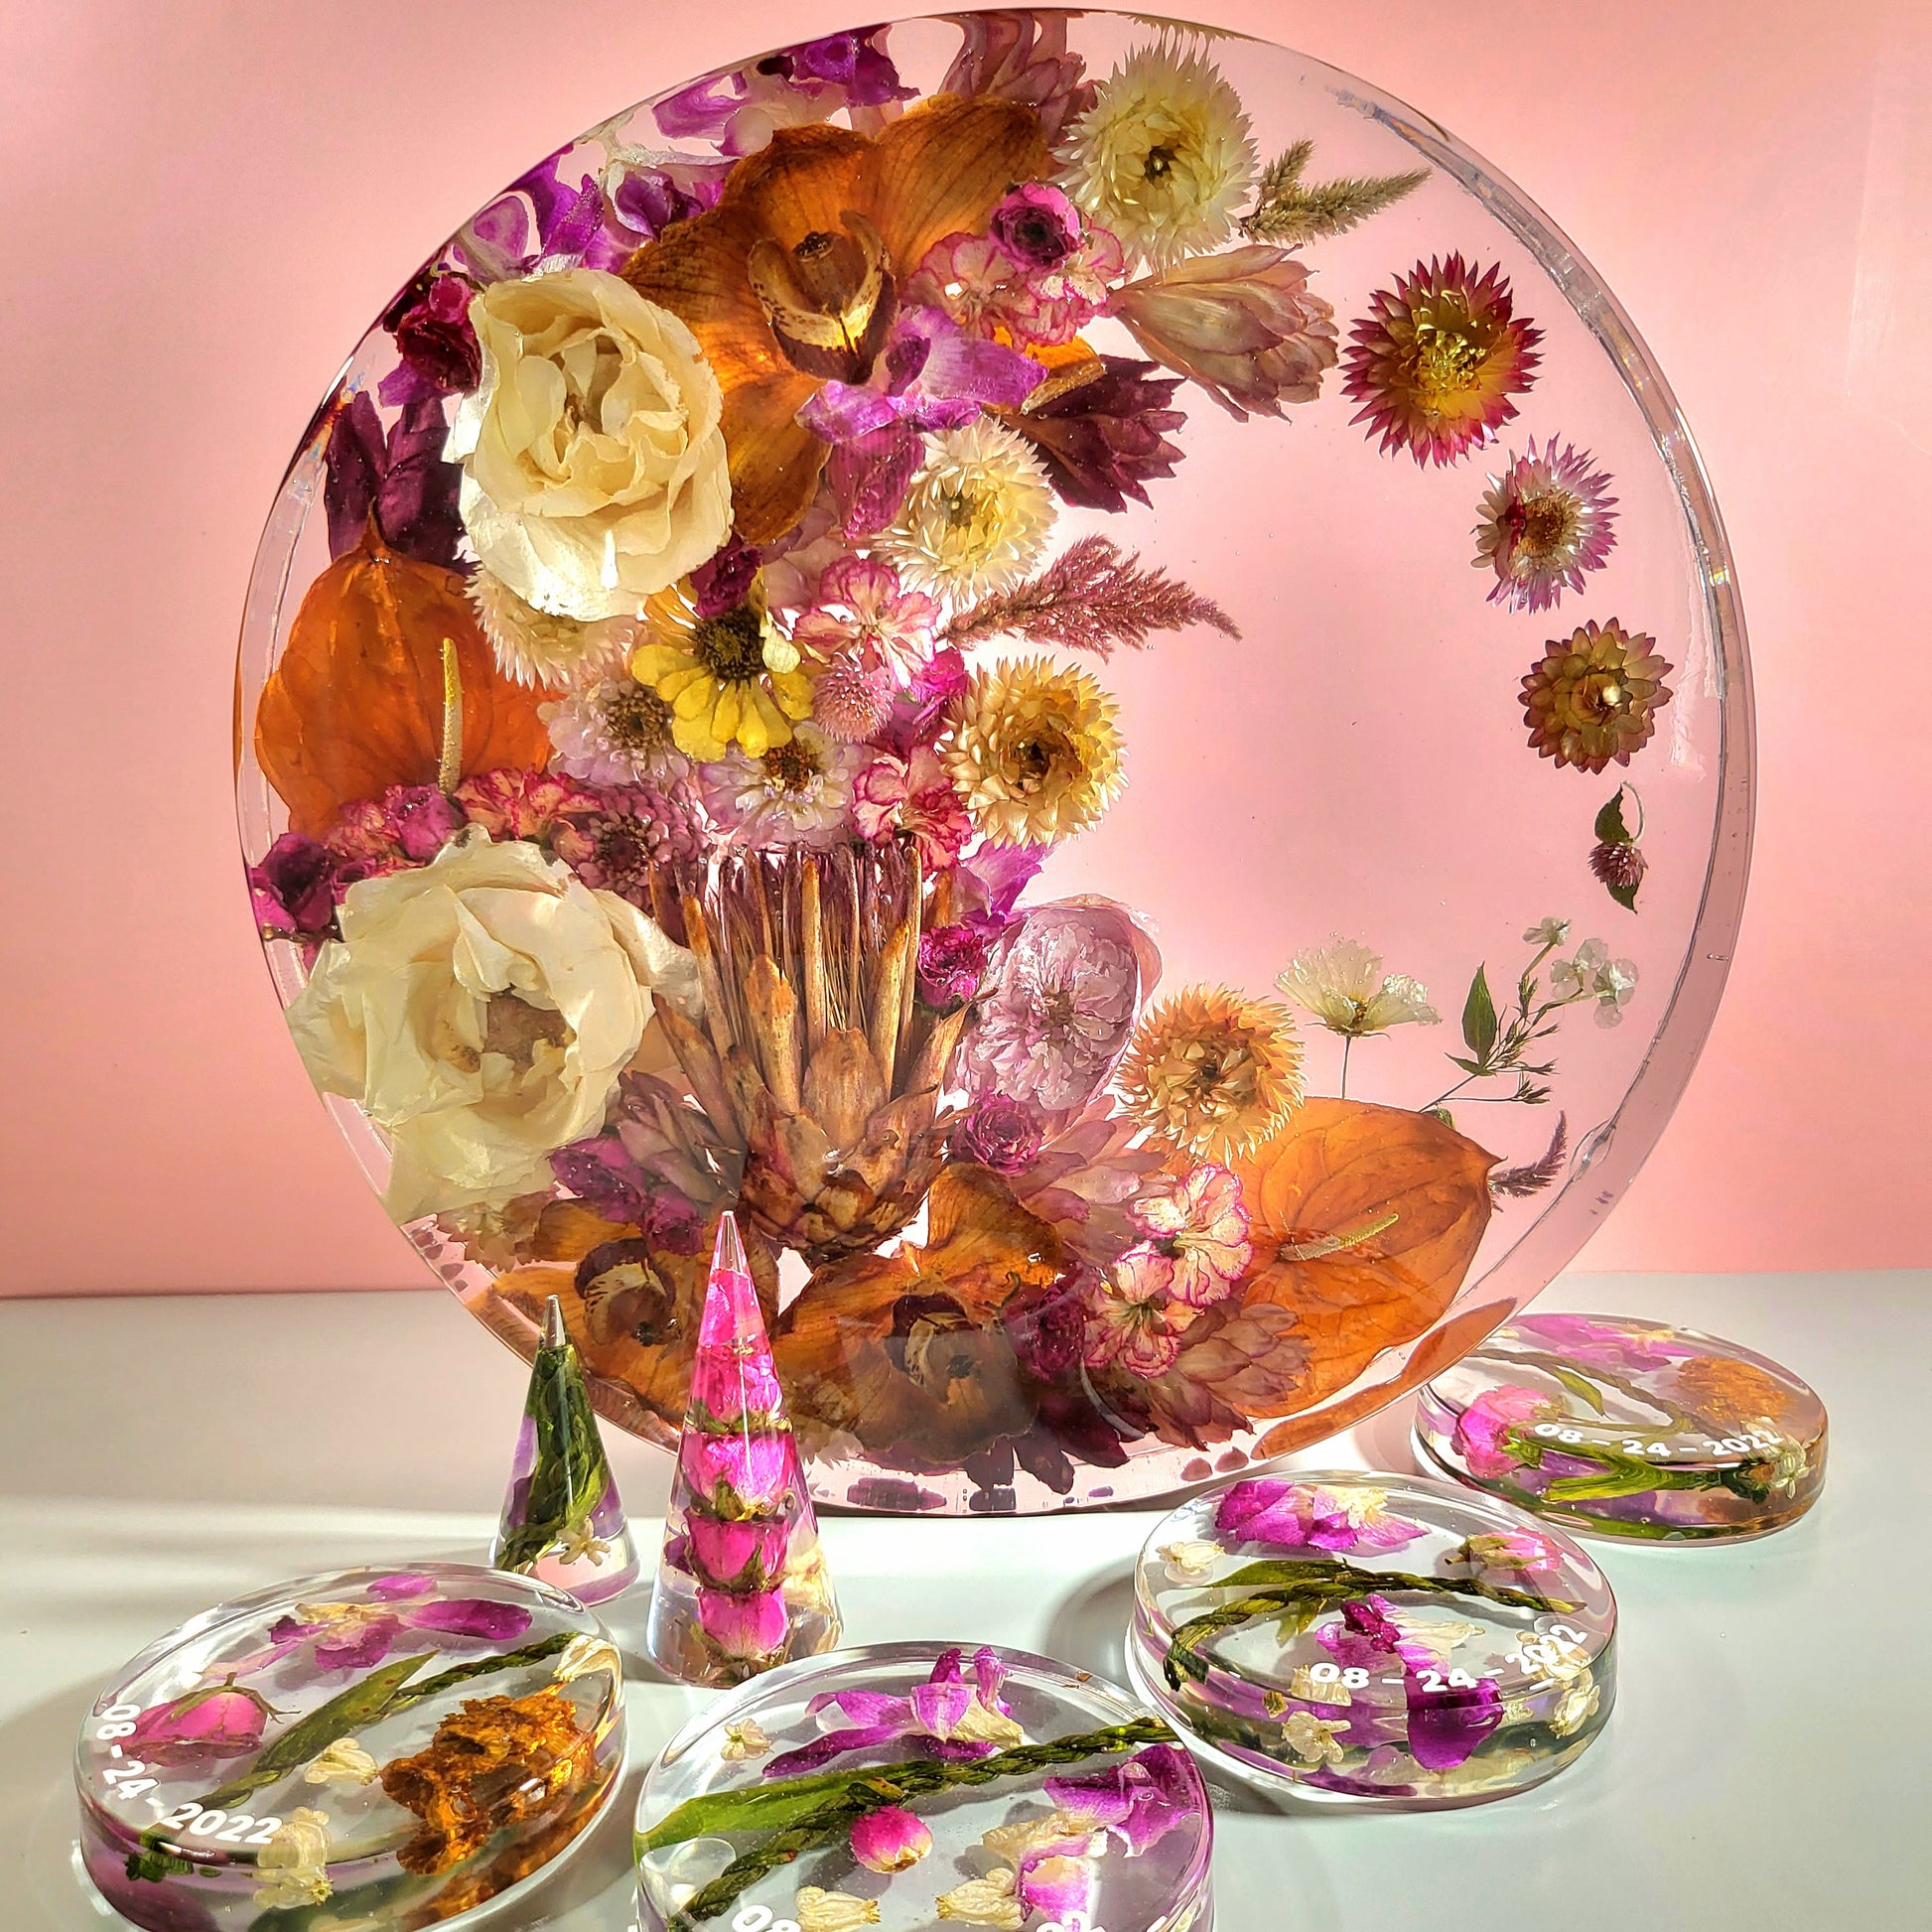 Giani Everlasting Bridal Flower Casting and Preservation Kit